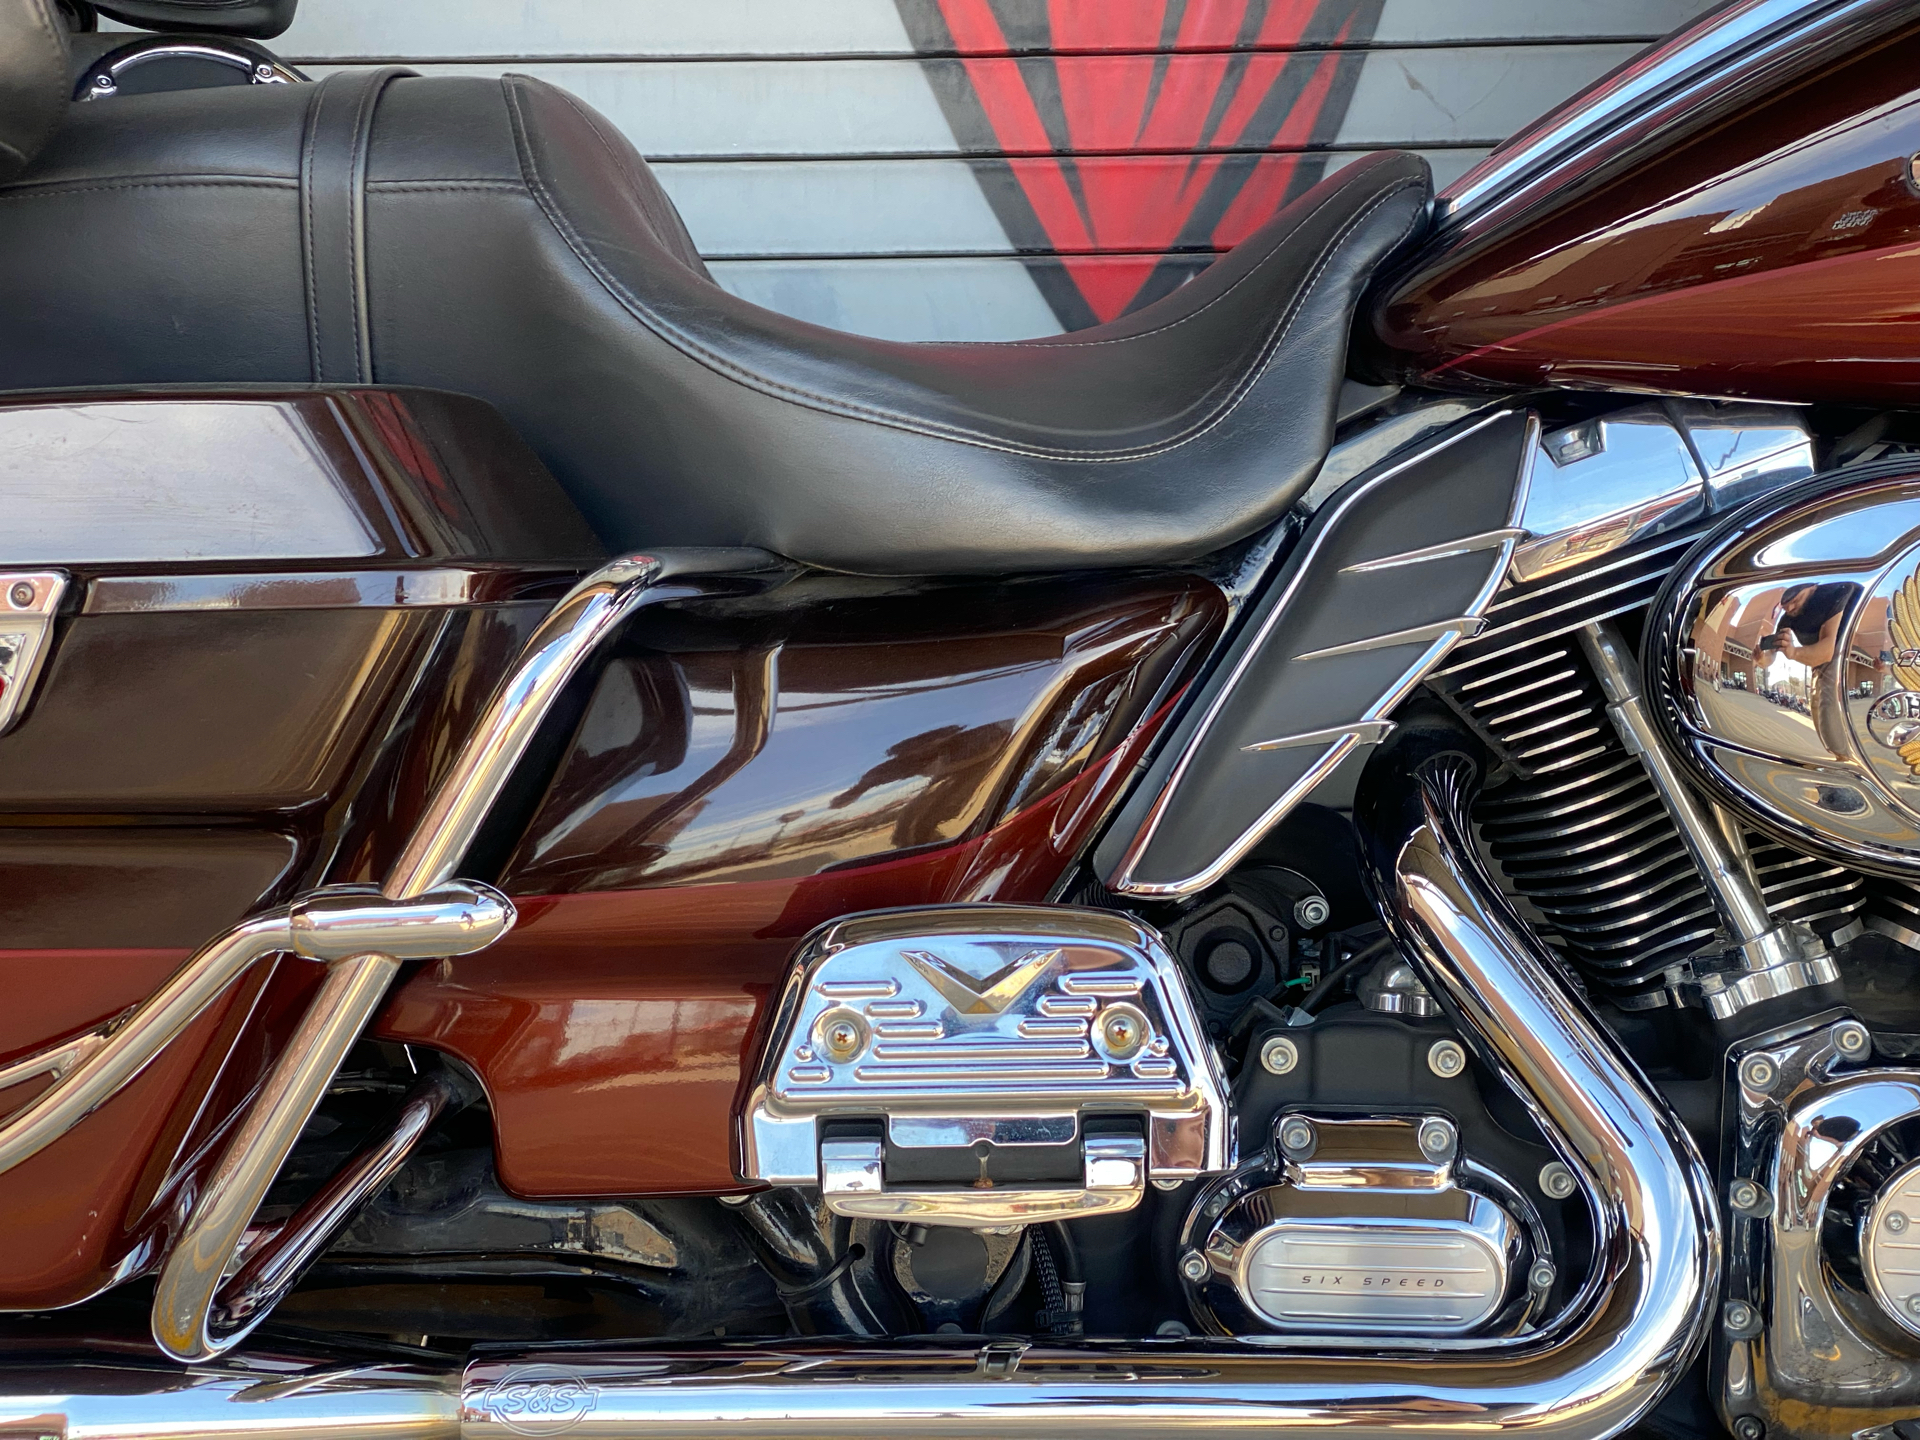 2011 Harley-Davidson Electra Glide® Ultra Limited in Carrollton, Texas - Photo 7